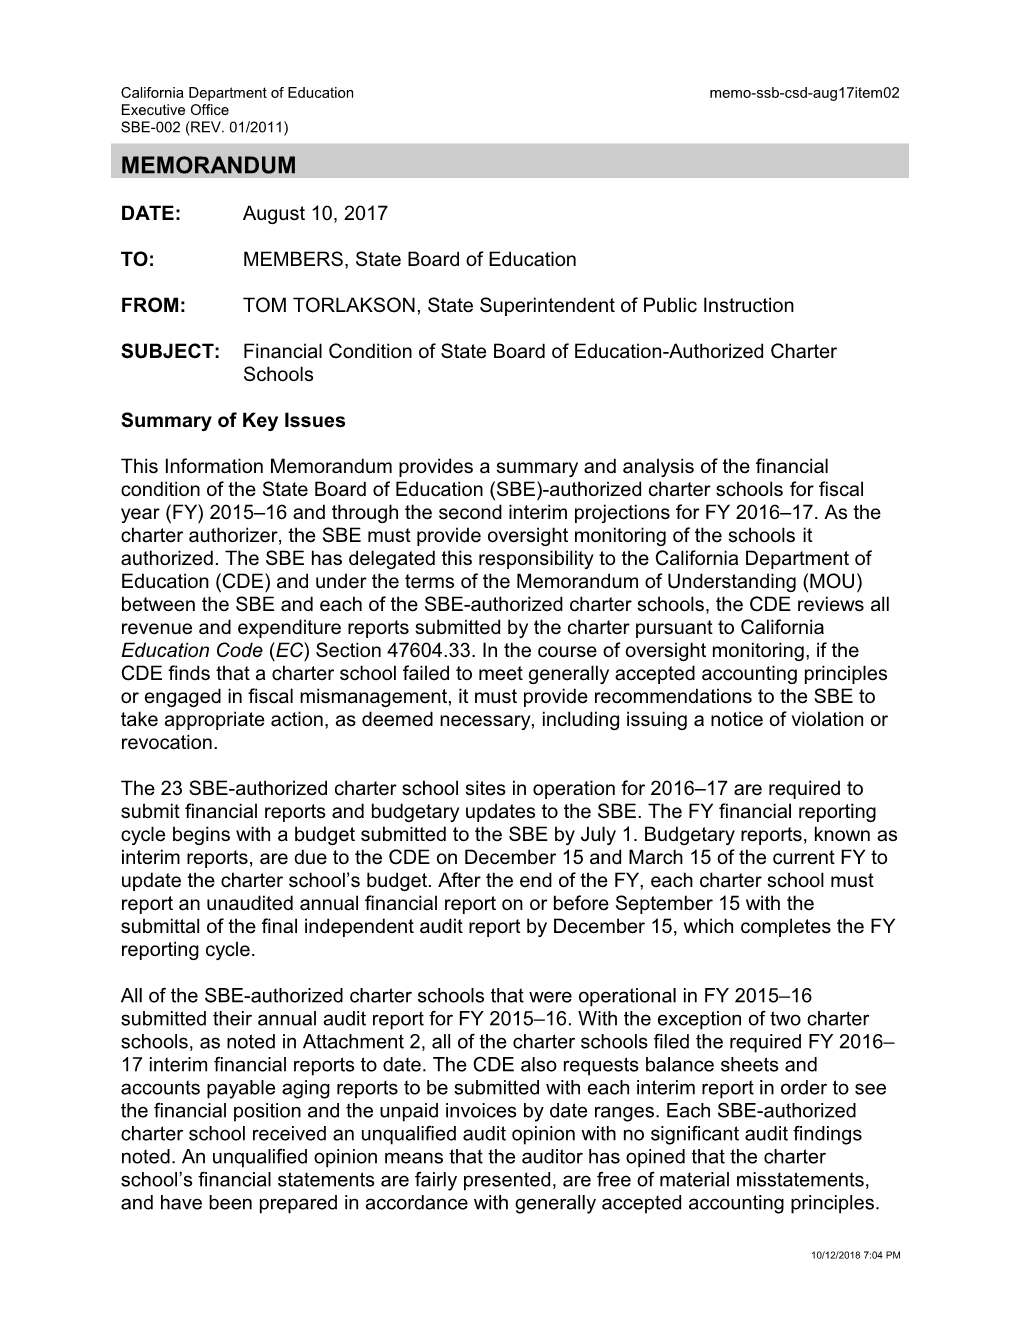 August 2017 Memo SSB CSD Item 02 - Information Memorandum (CA State Board of Education)